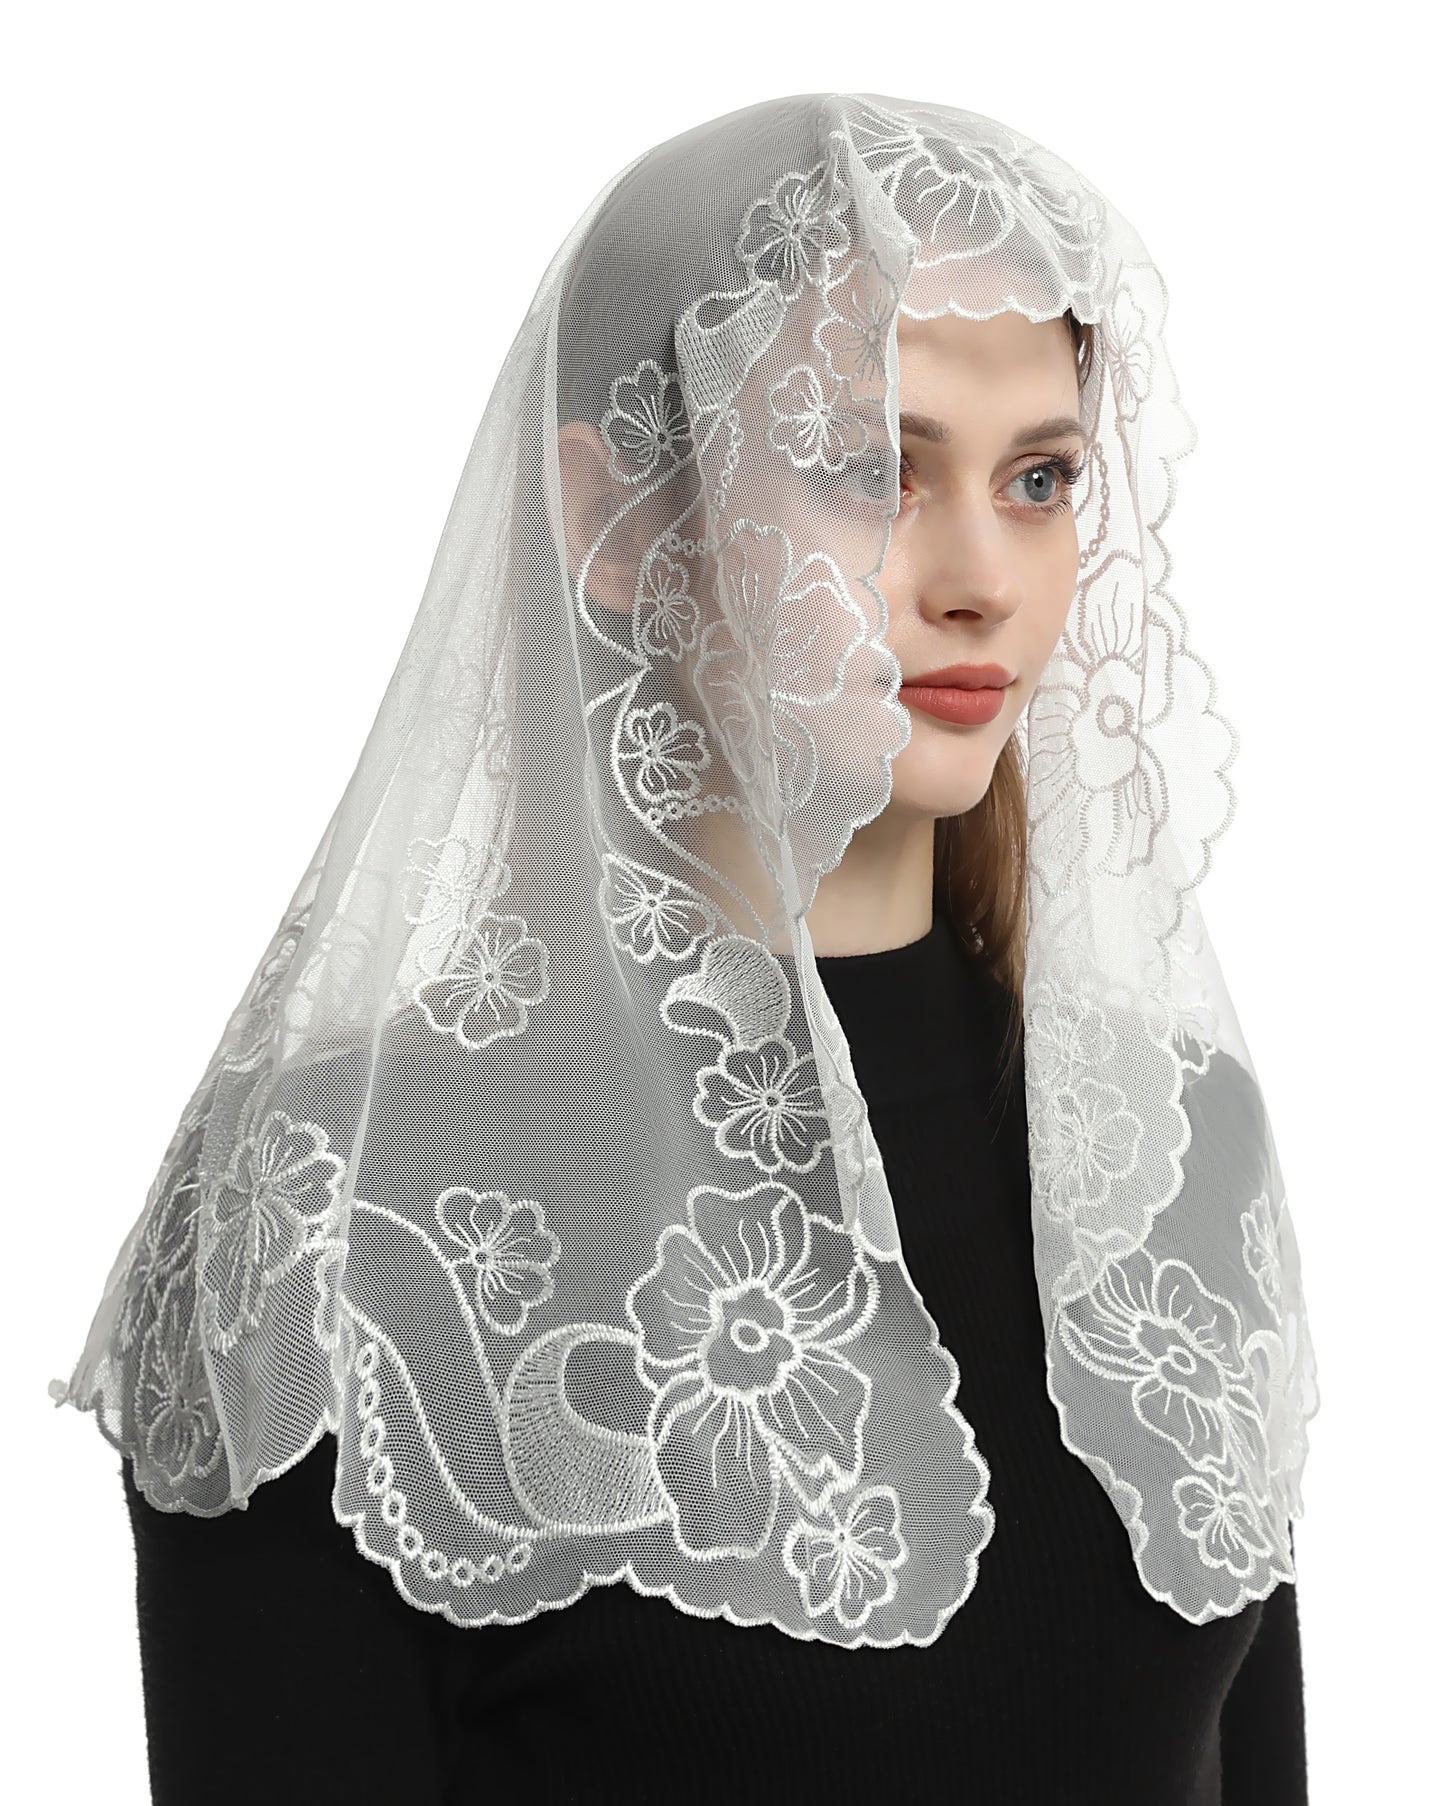 Bozidol Church Veil Lace Mantilla - D Shape Virgin Mary Embroidery Head Covering Spanish Catholic Mass Veil for Women